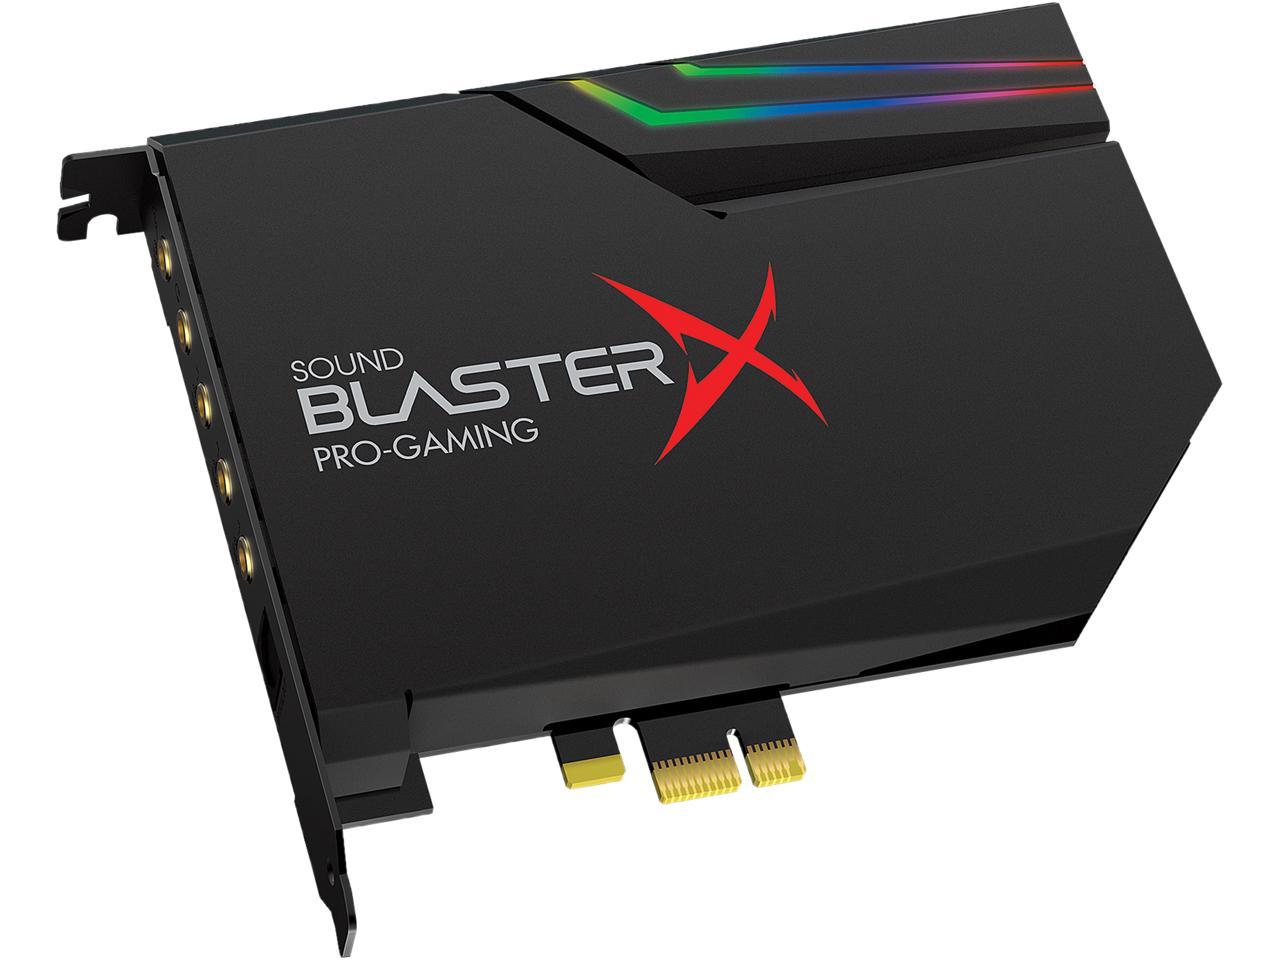 Creative Sound Blasterx Ae 5 Rgb 5 1 Discrete 7 1 Virtual Surround Pro Gaming Pcie Sound Card Newegg Com